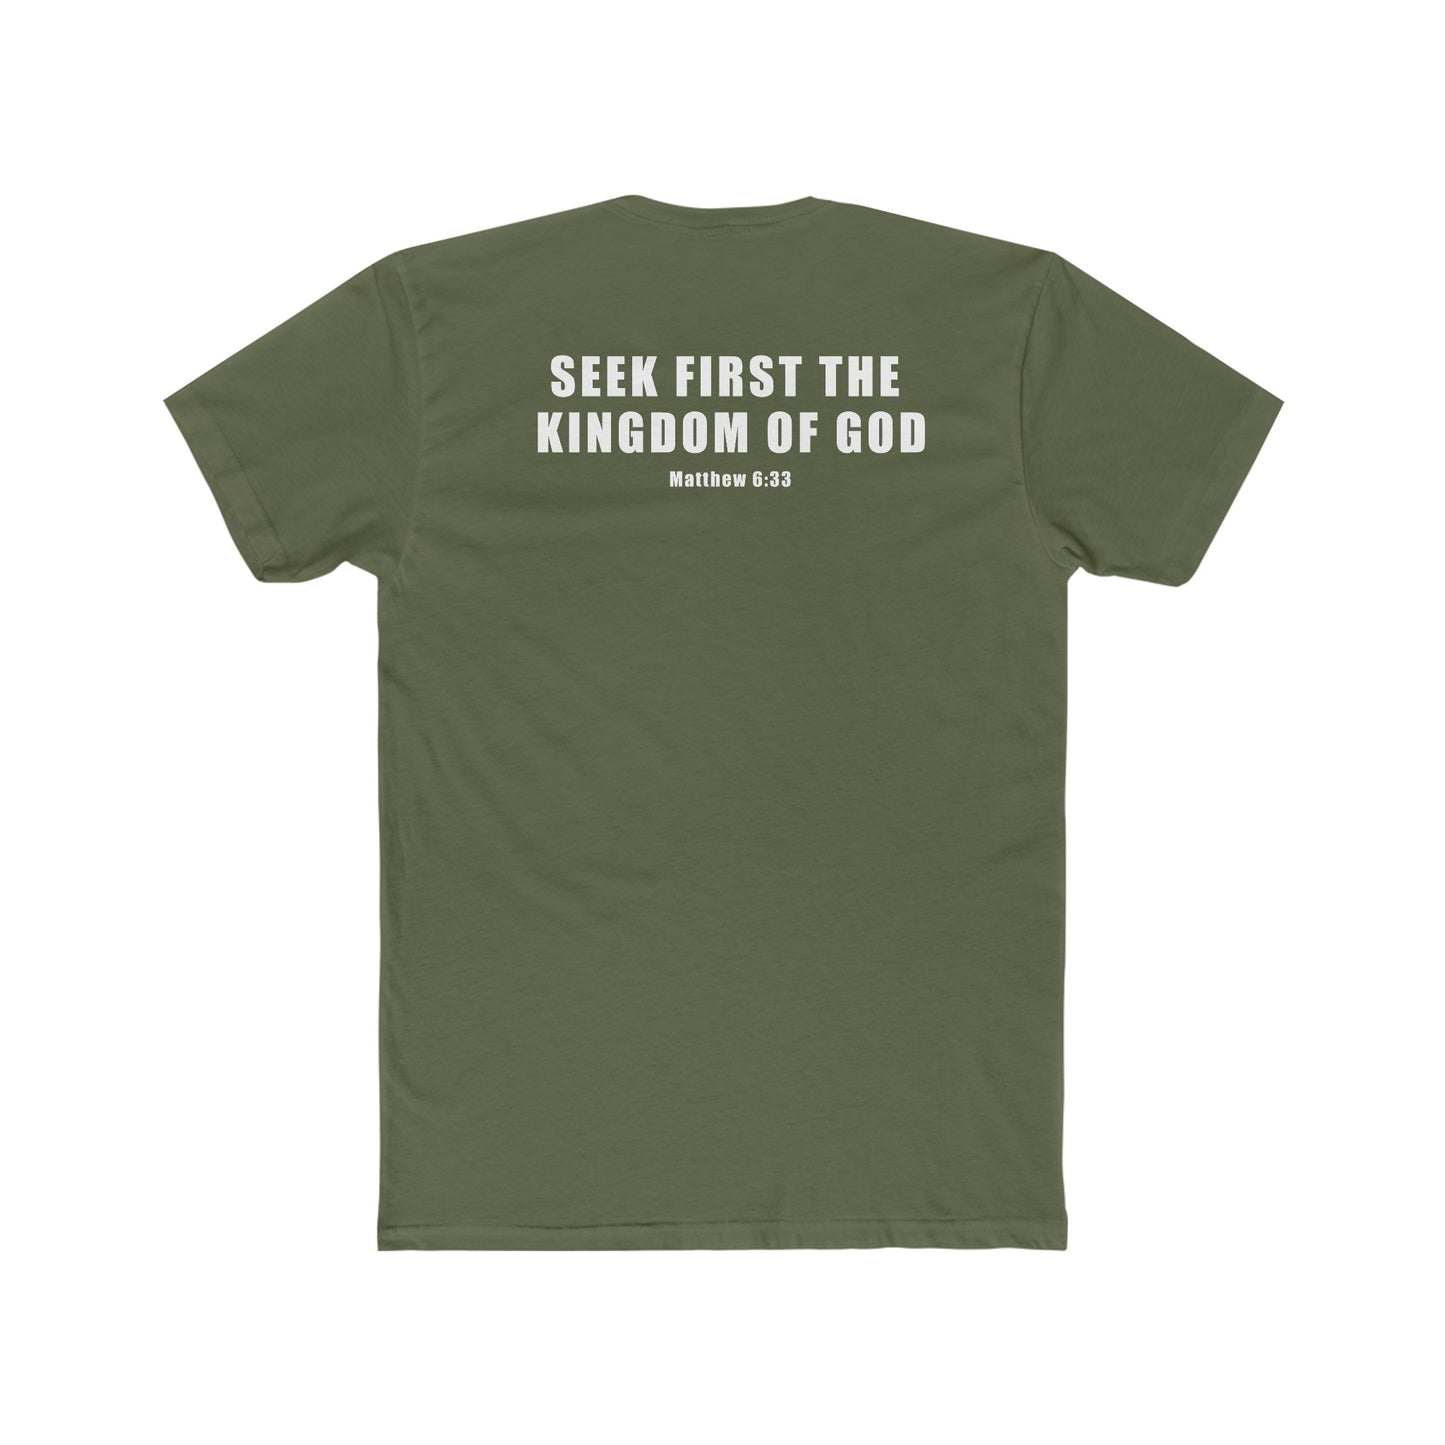 Citizen of the Kingdom unisex T-shirt